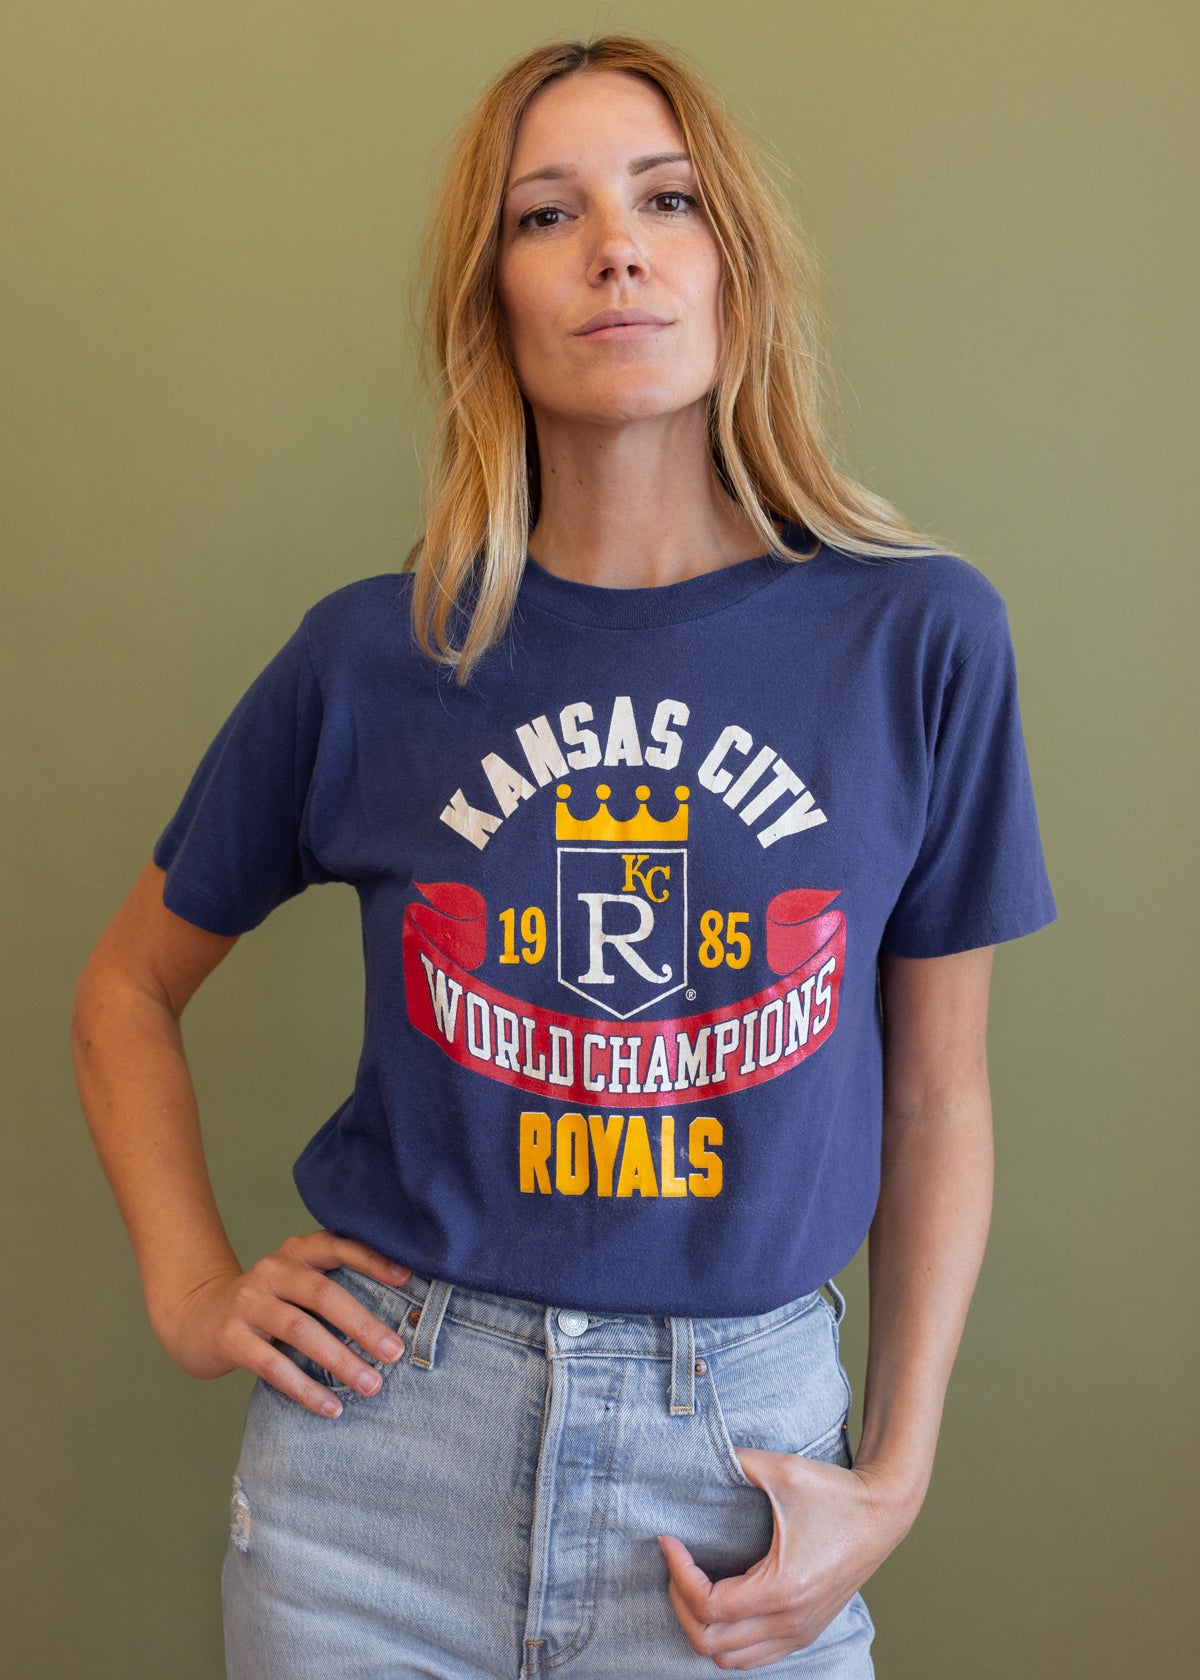 1985 Kansas City Royals World Champions Shirt